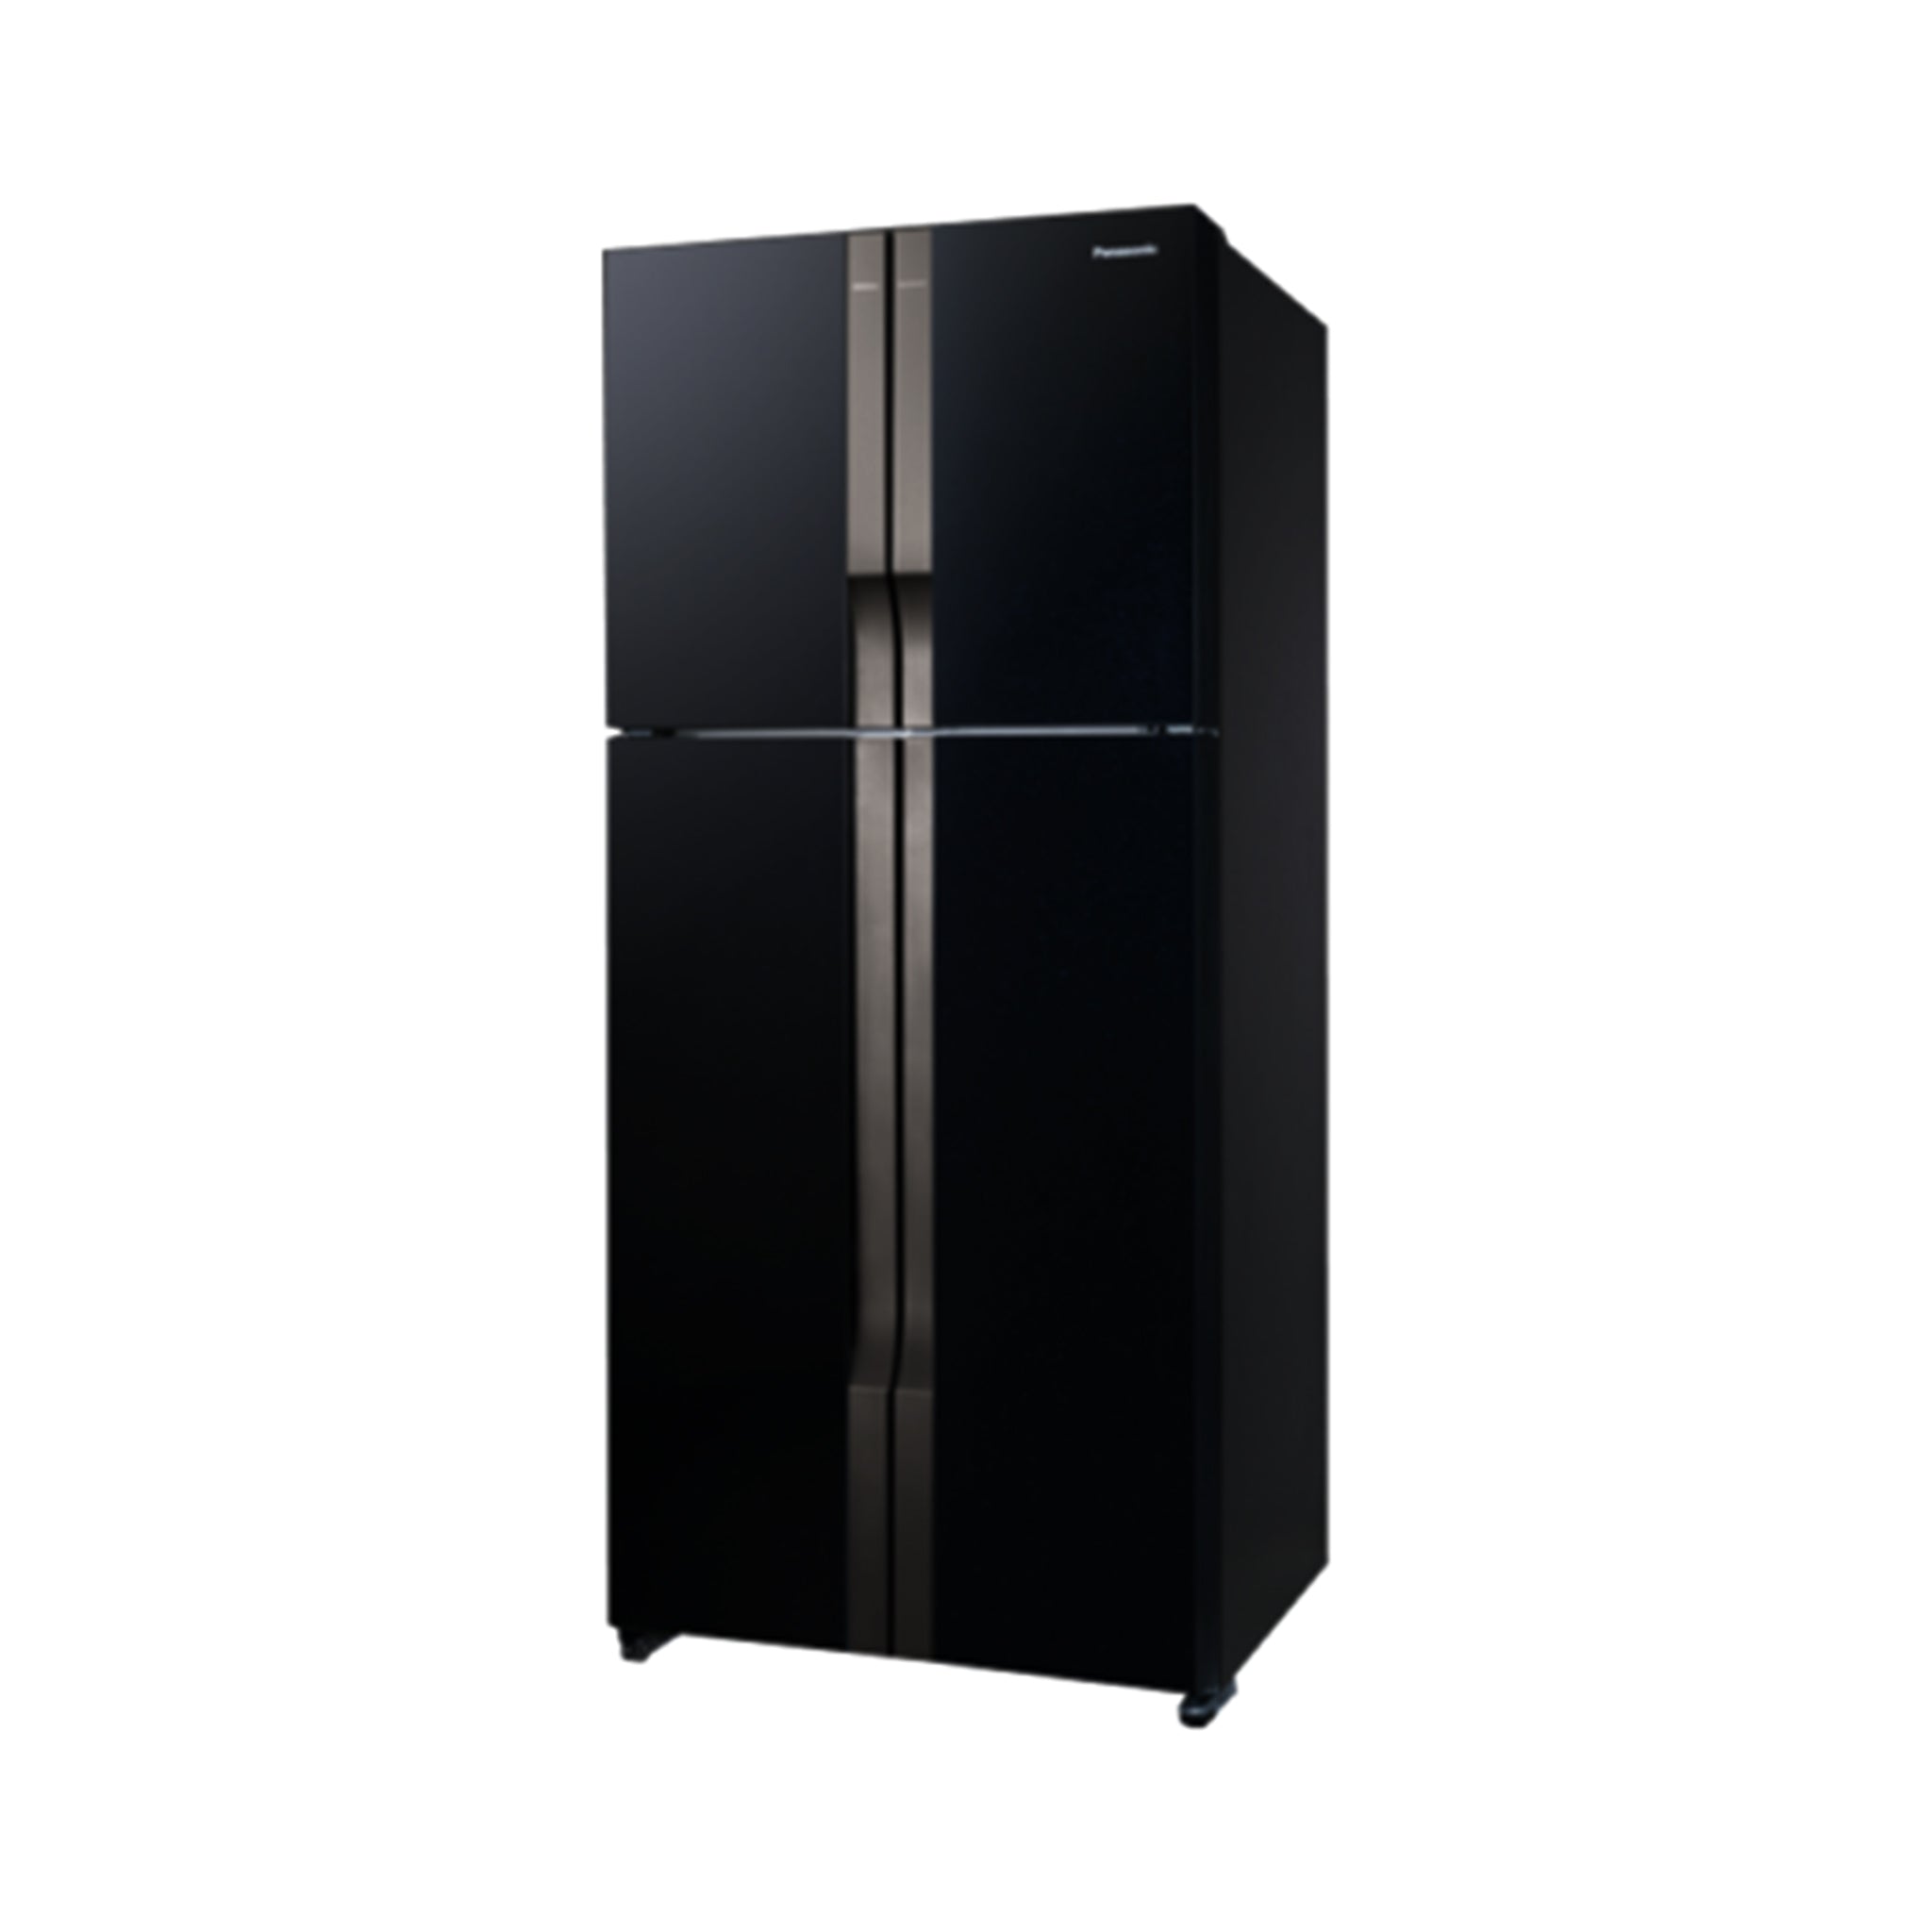 PANASONIC 19.4 cu.ft NR-DZ601VGKP 4-Door Bottom Freezer Refrigerator Panasonic